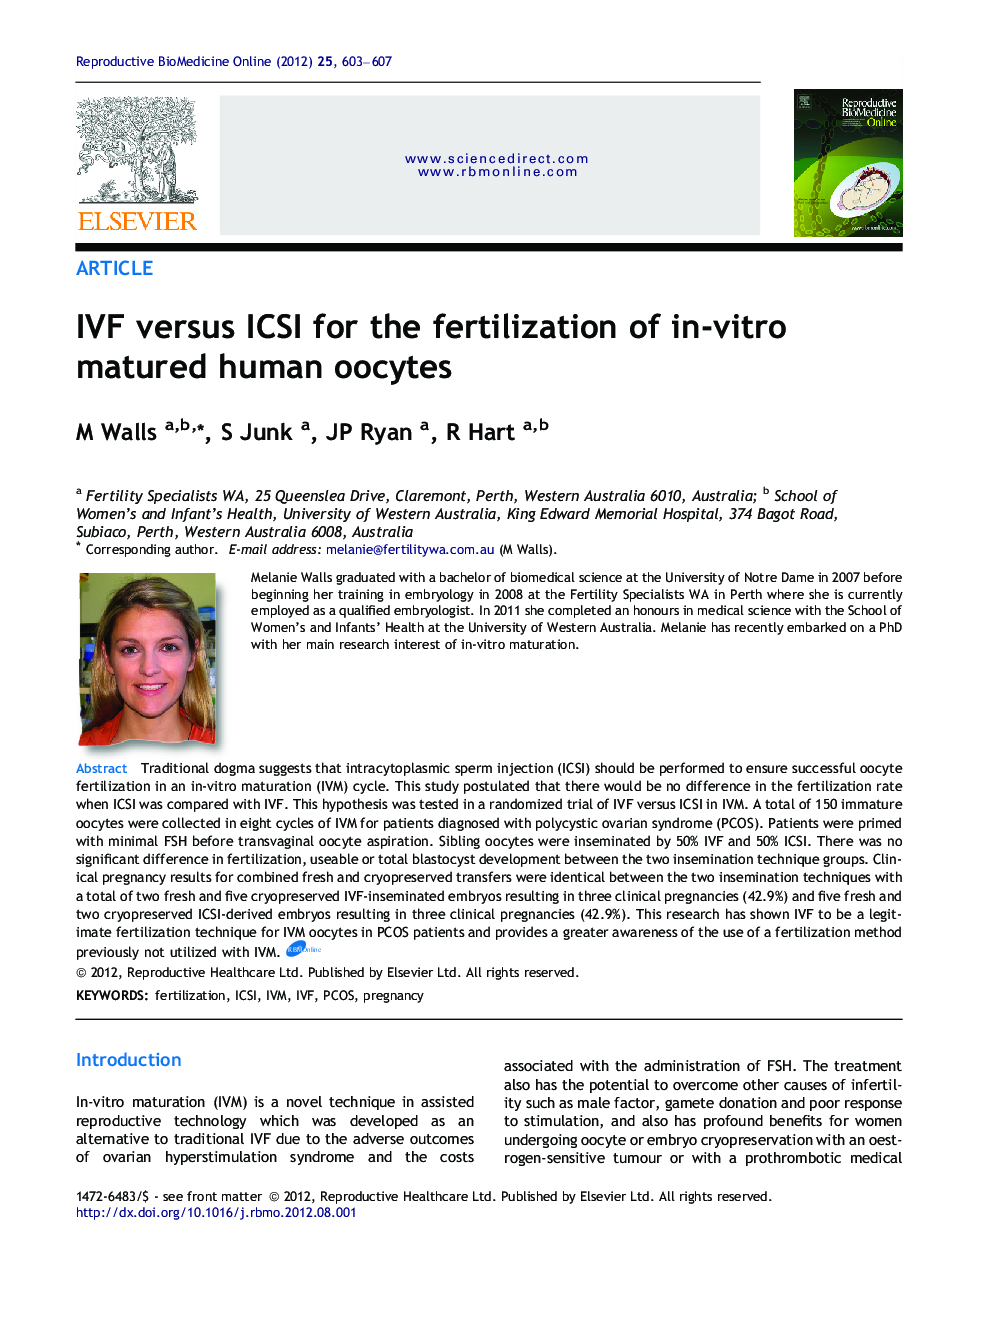 IVF versus ICSI for the fertilization of in-vitro matured human oocytes 